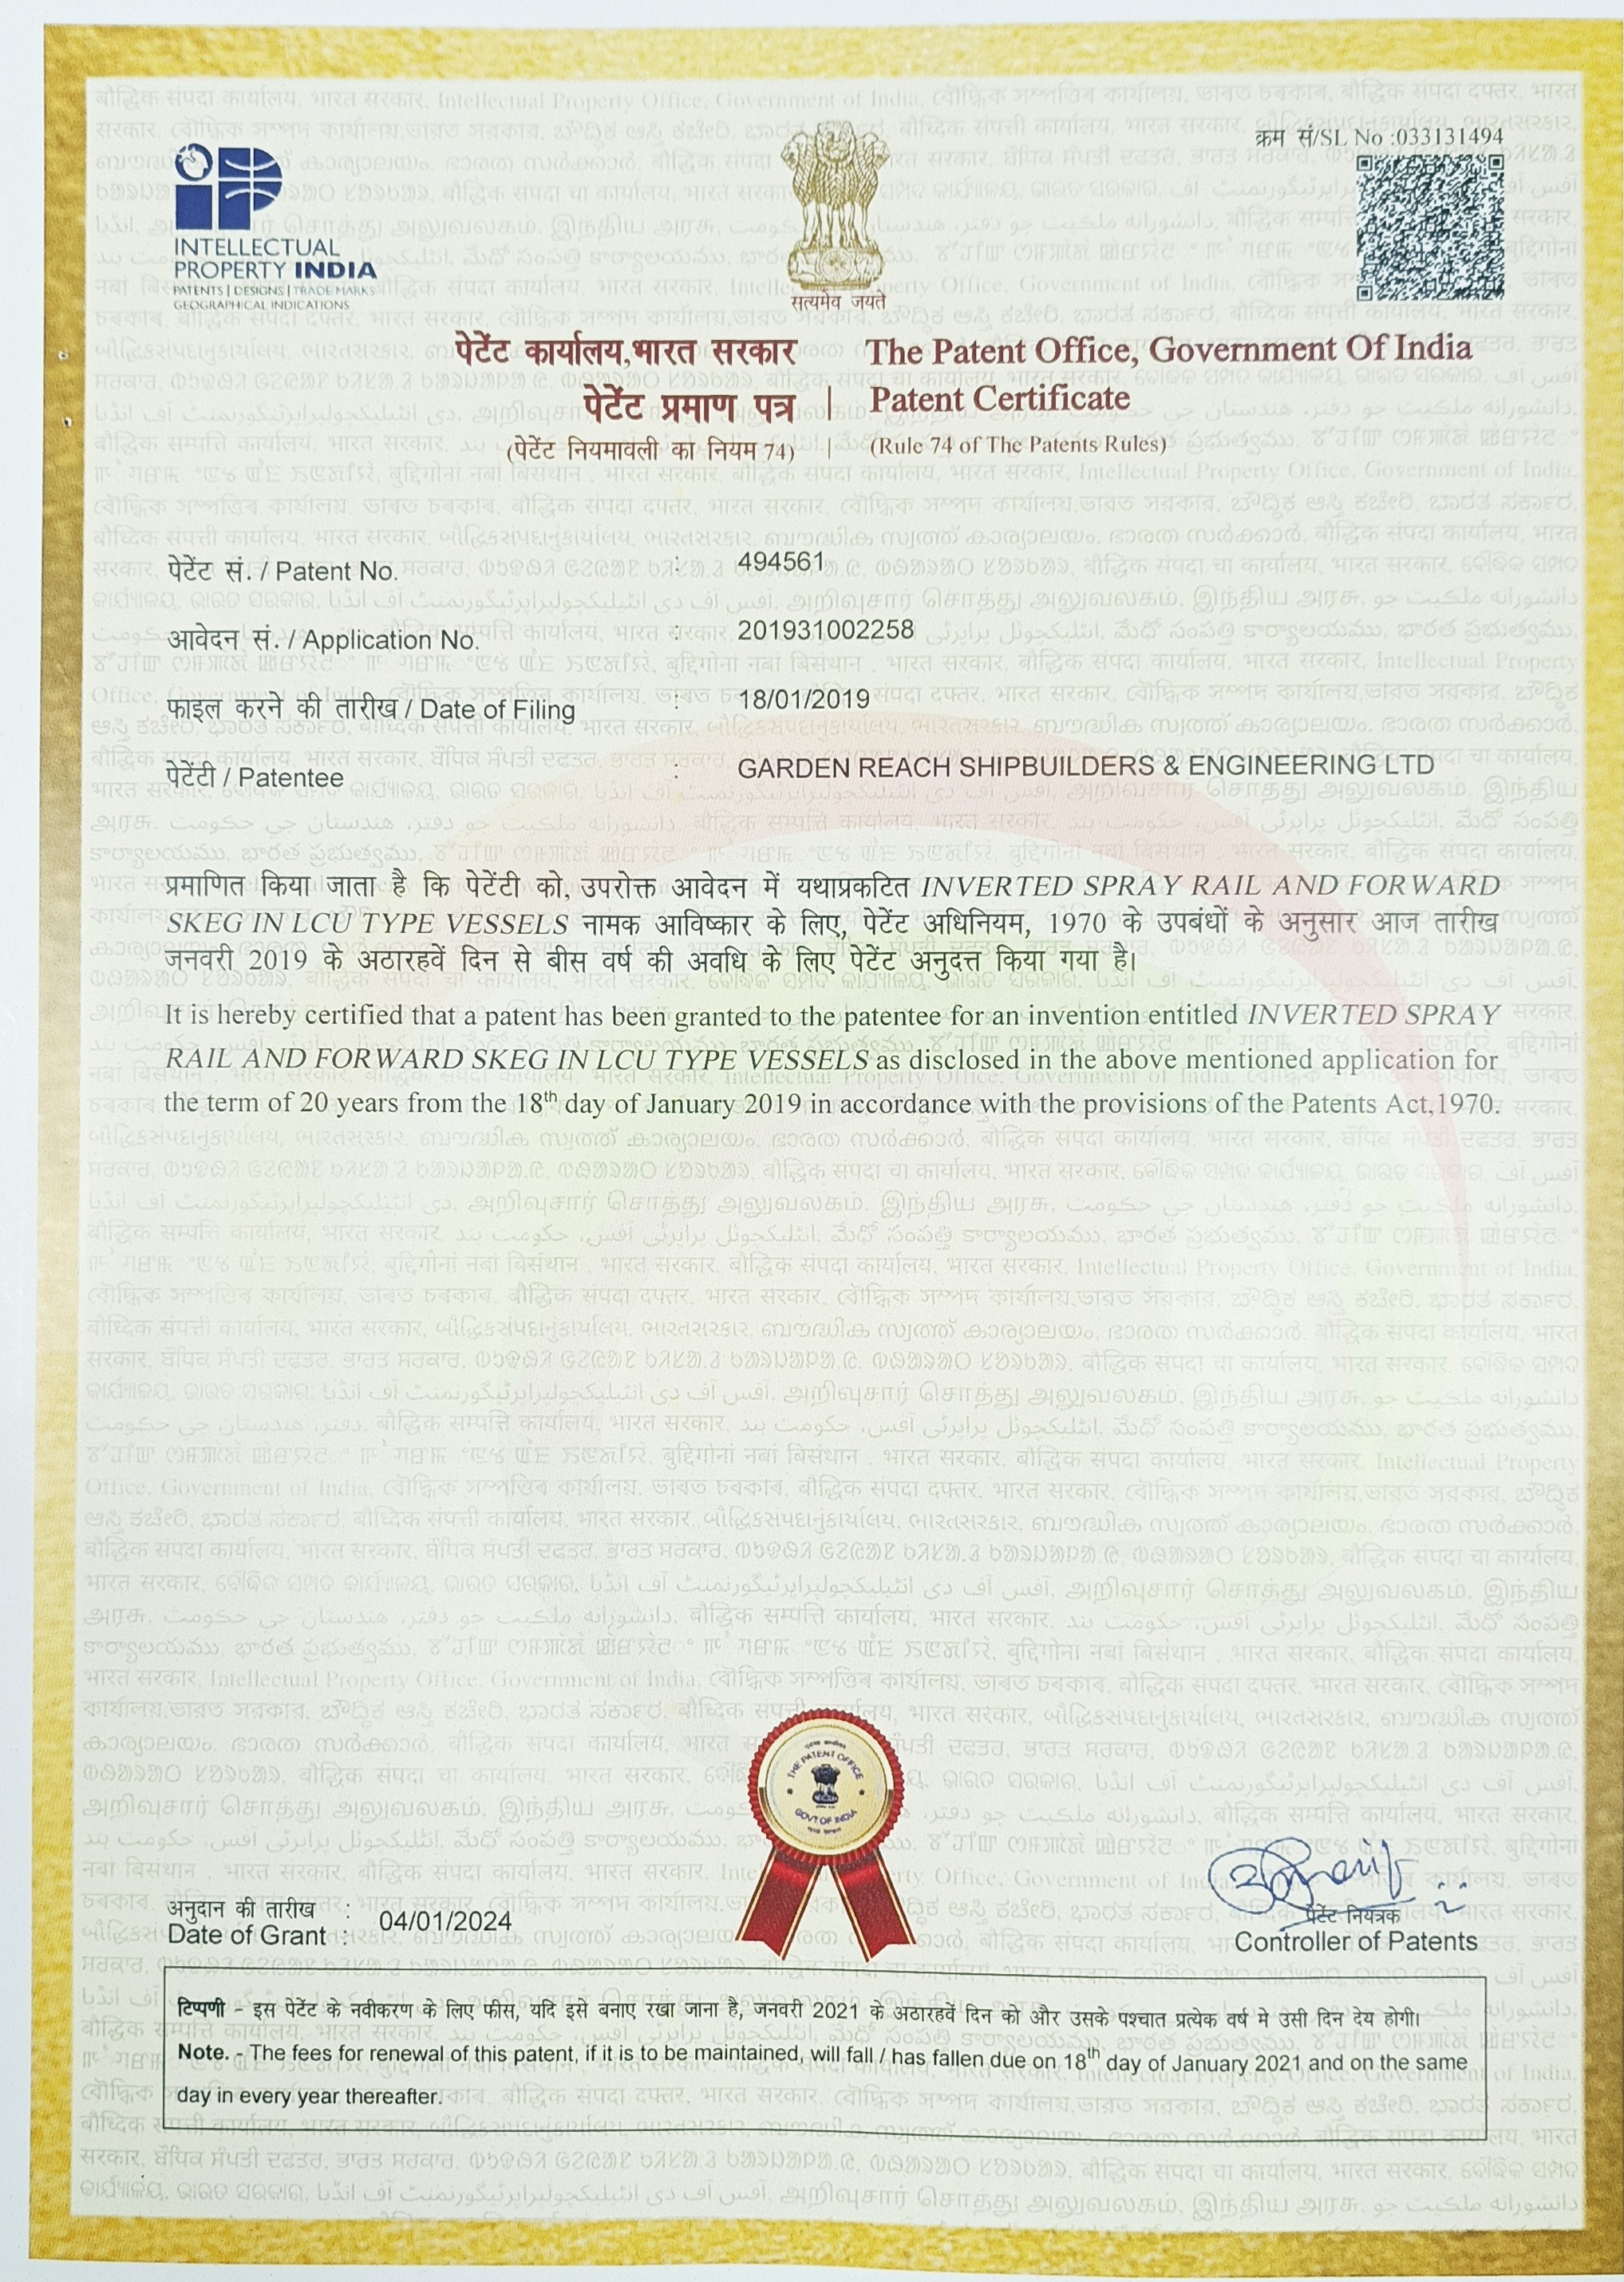 Mission Raksha Gyan Shakti - GRSE received Grant of 02 Patents from Indian Patent Office on 10 Jan 24 - Thumbnail